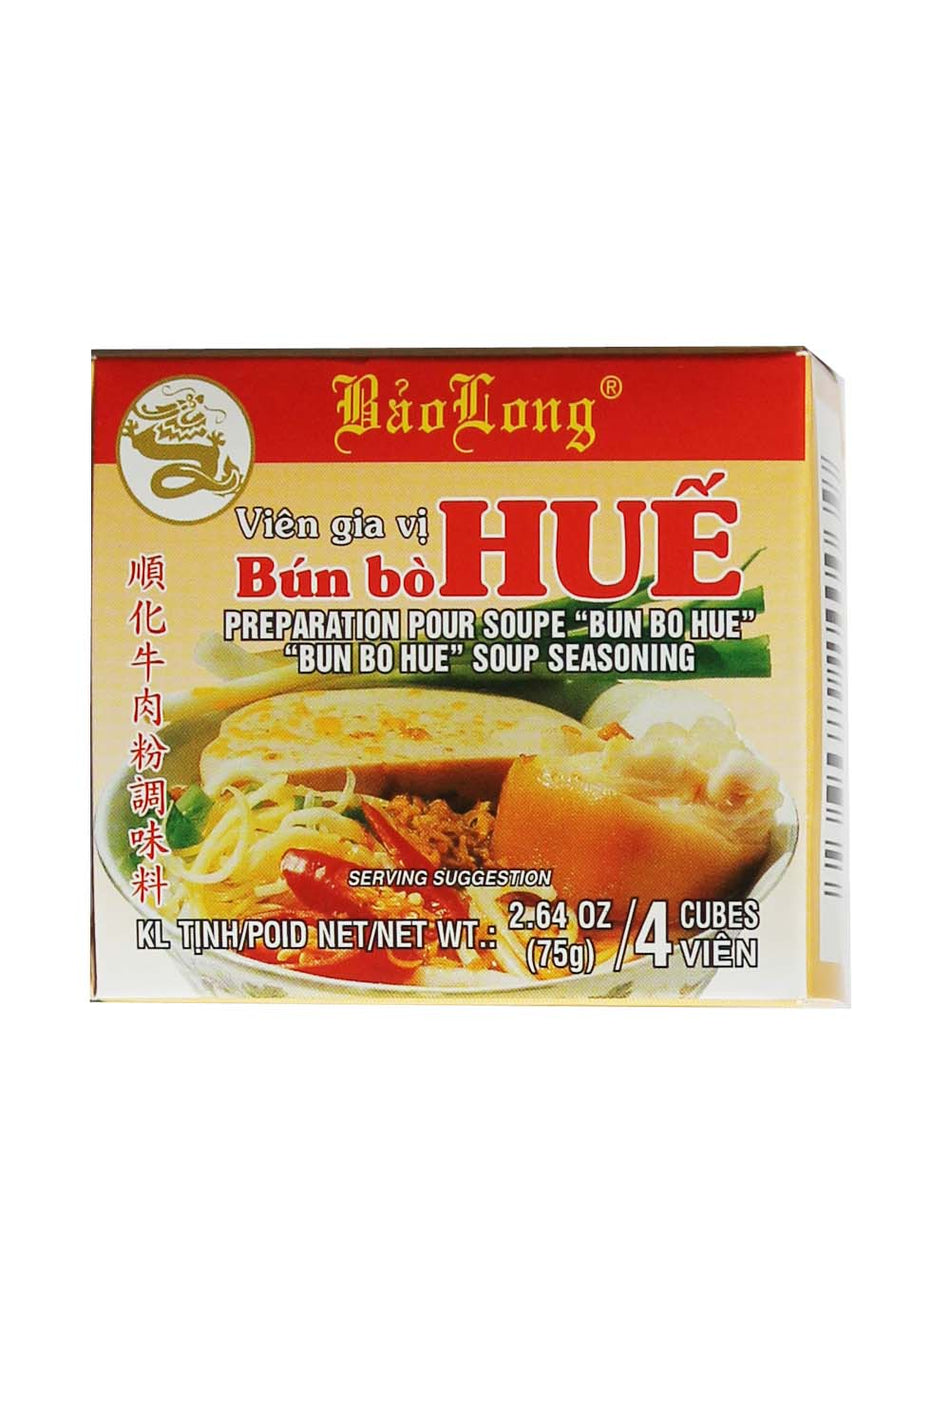 Bao Long Bun Bo Hue Soup Seasoning